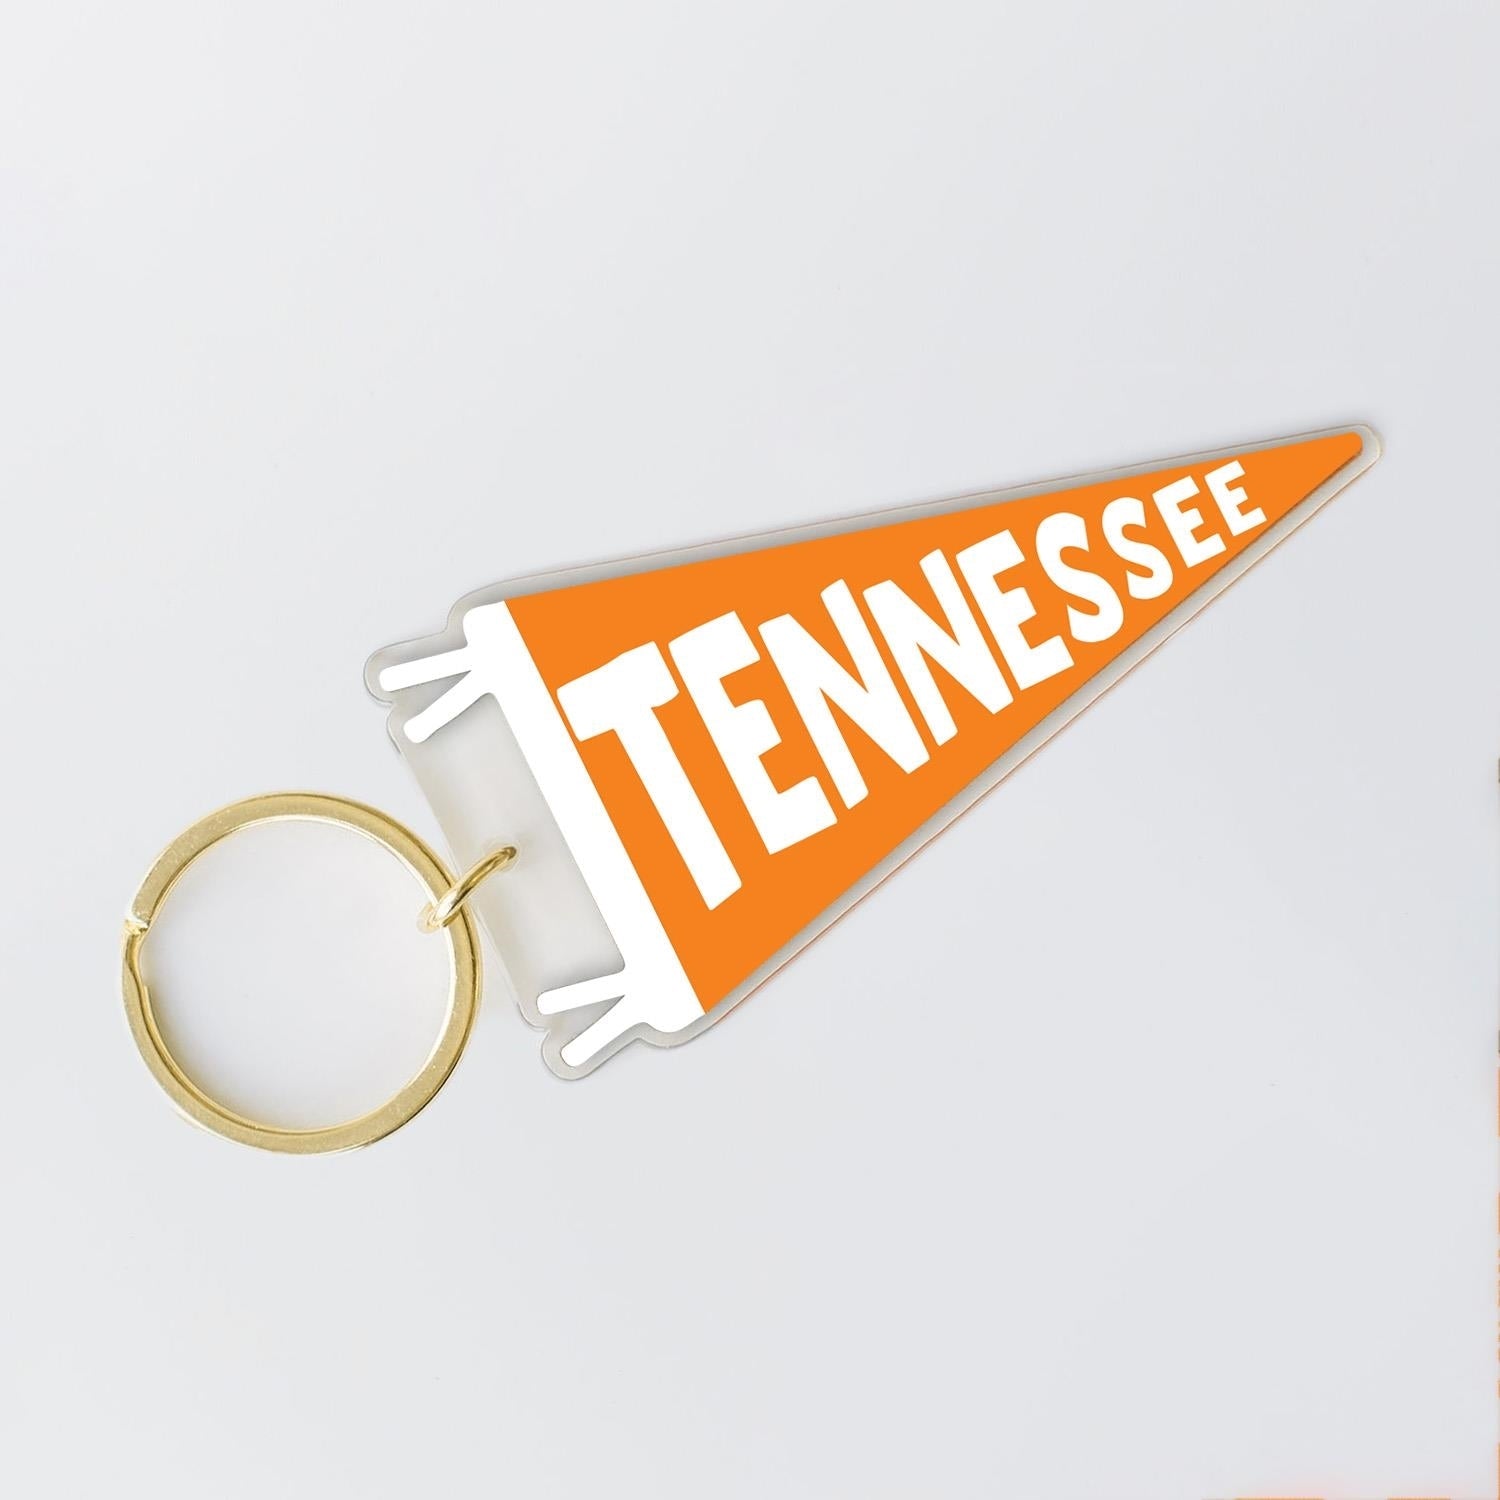 Tennessee Acrylic Keychain Orange Pennant